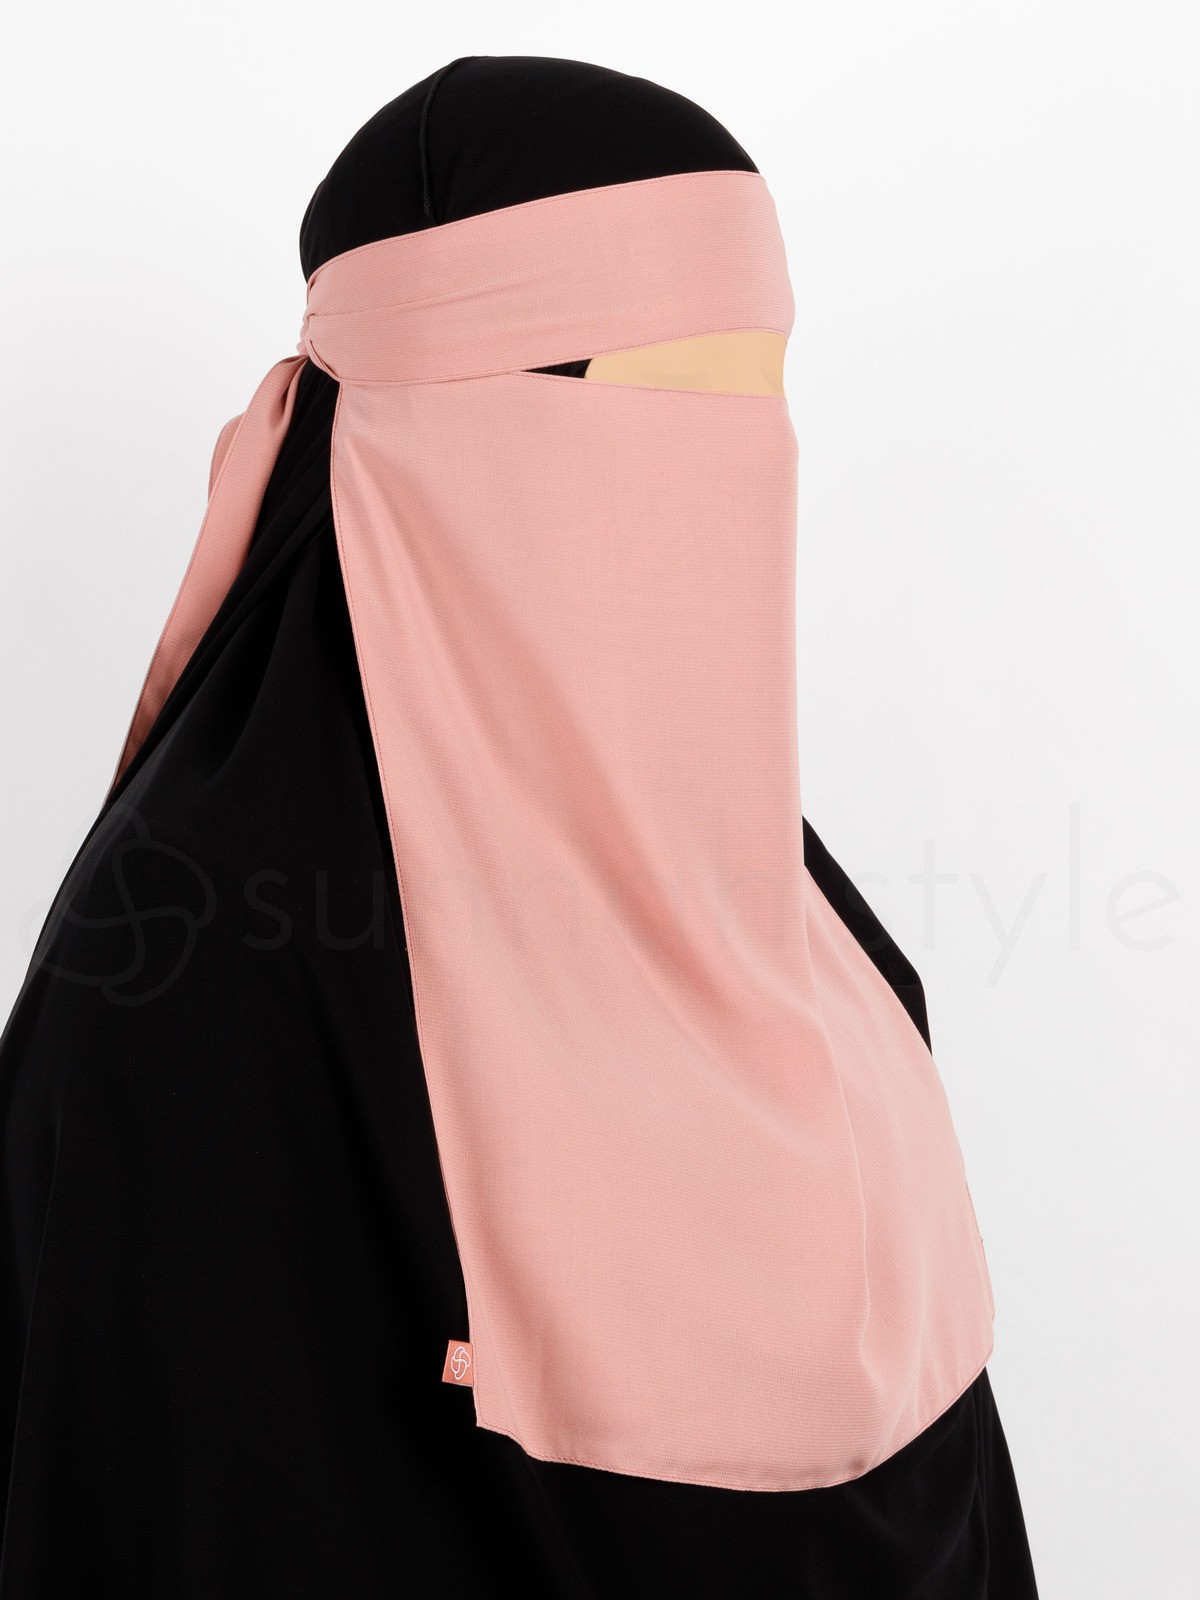 Sunnah Style - Pull-Down One Layer Niqab (Blush)